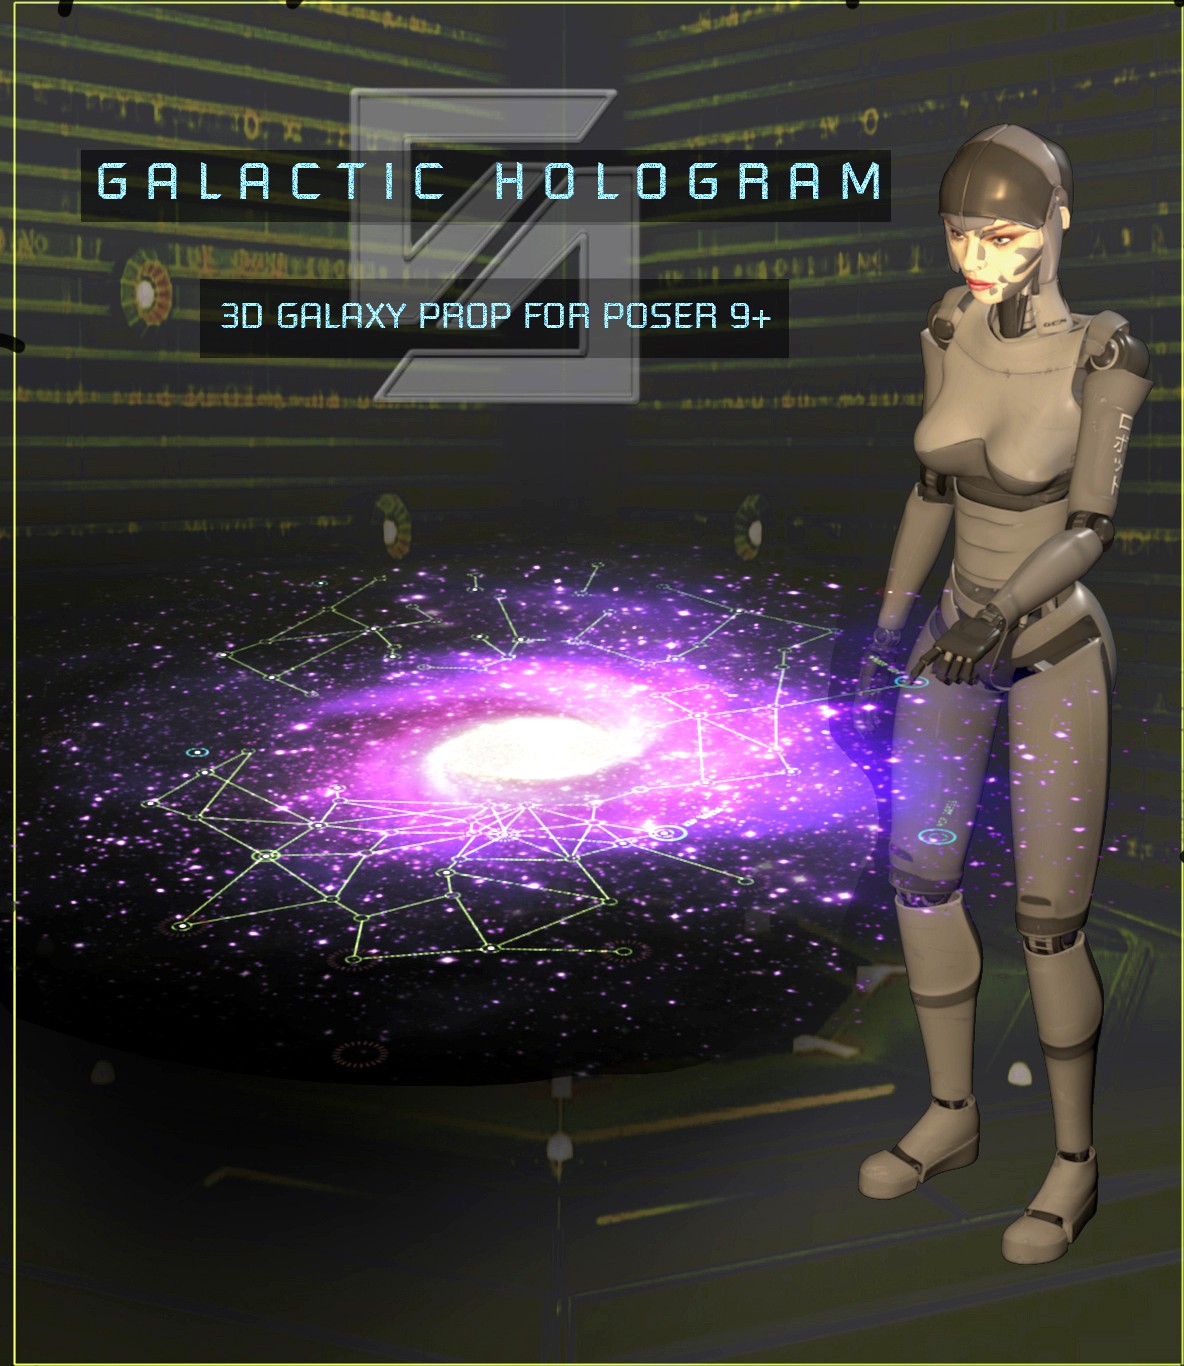 Galactic Hologram